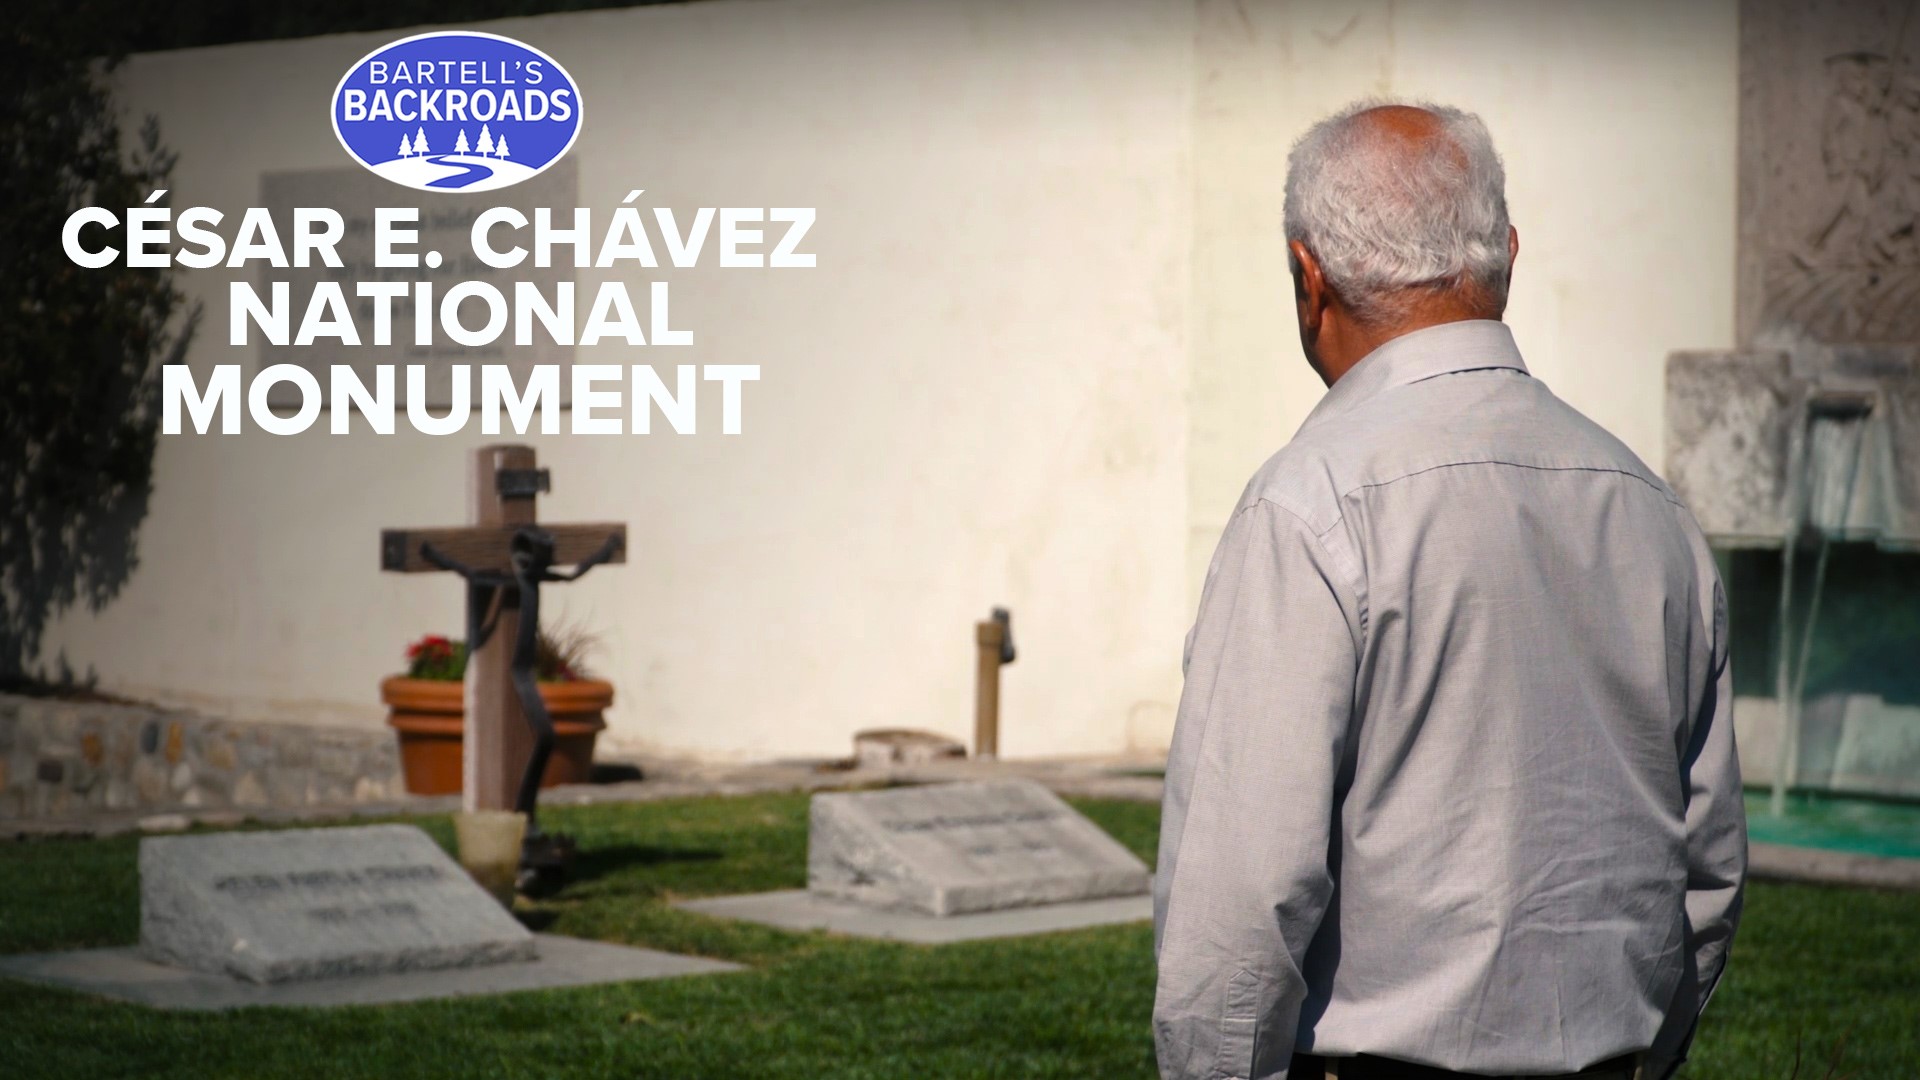 César E. Chávez National Monument pays tribute to those who changed farm labor laws.